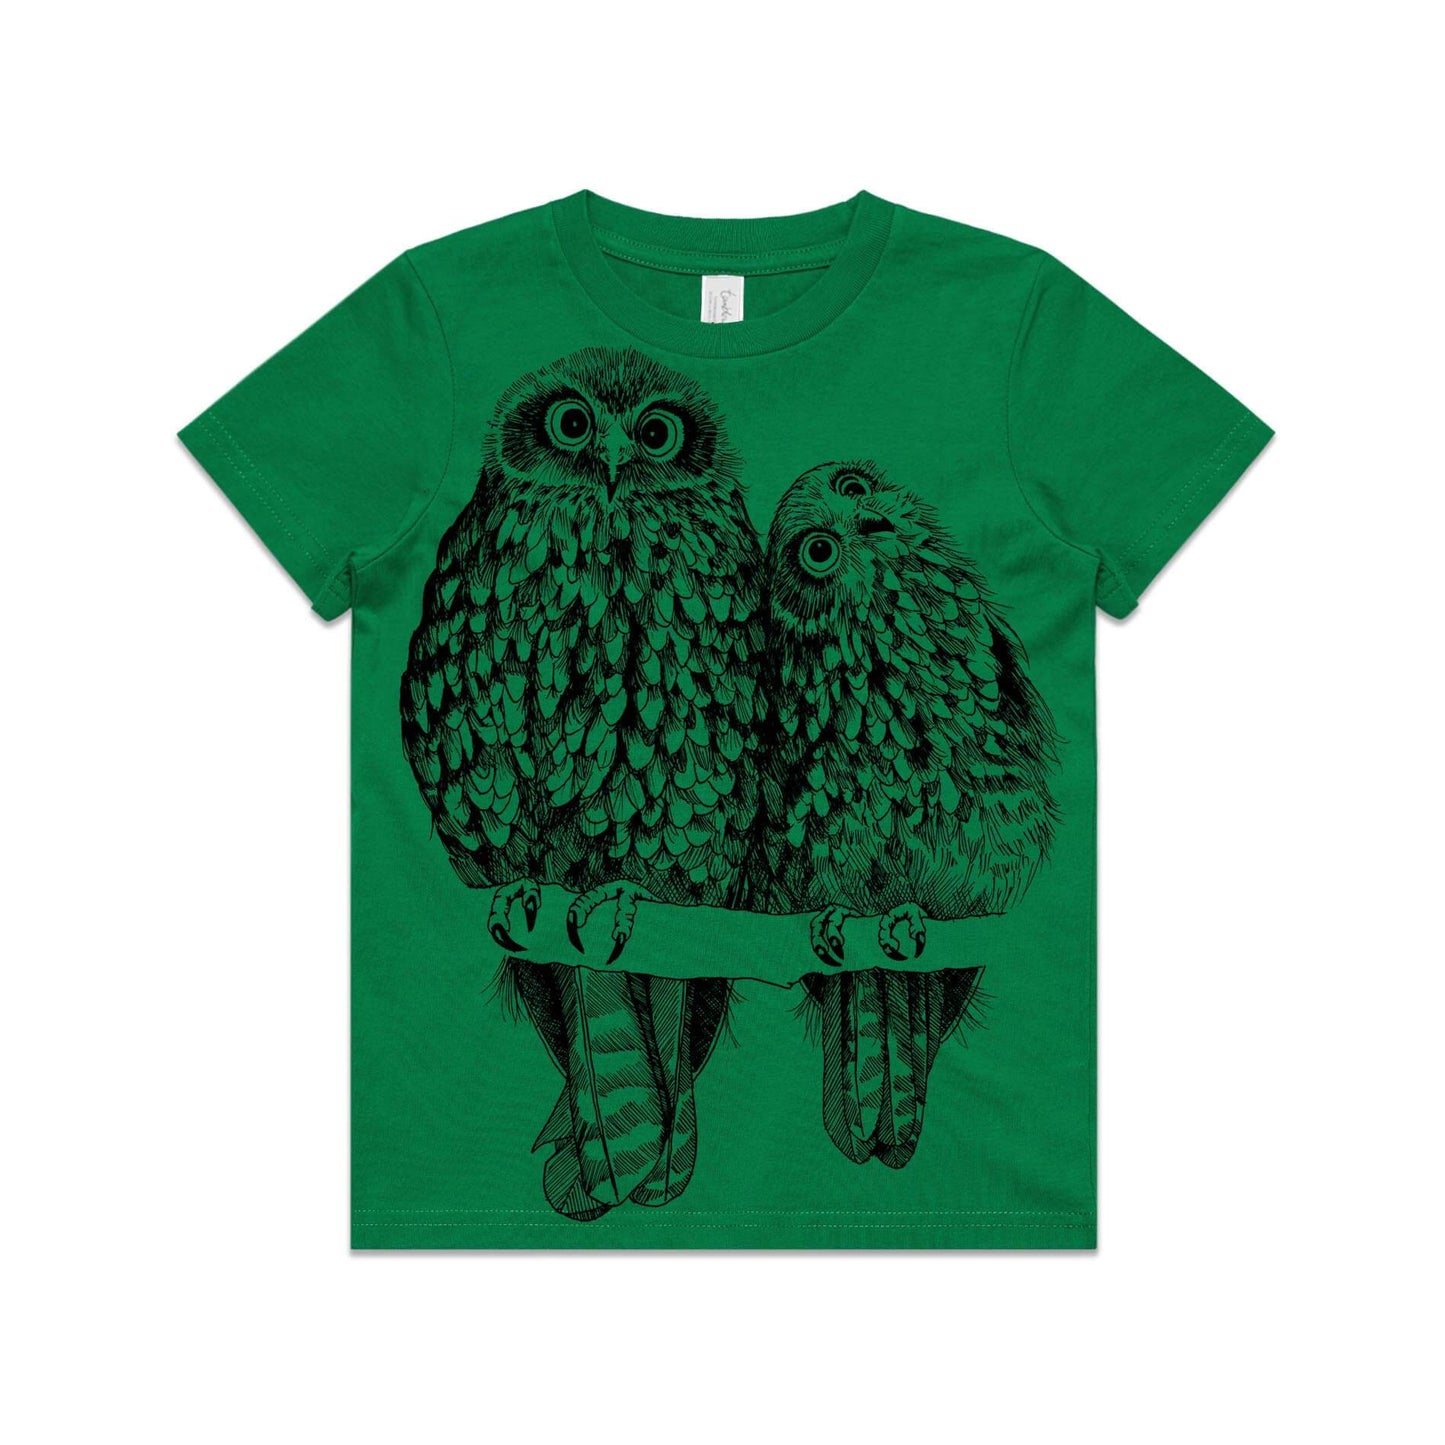 Green, cotton kids' t-shirt with screen printed Kids Morepork/Ruru design.